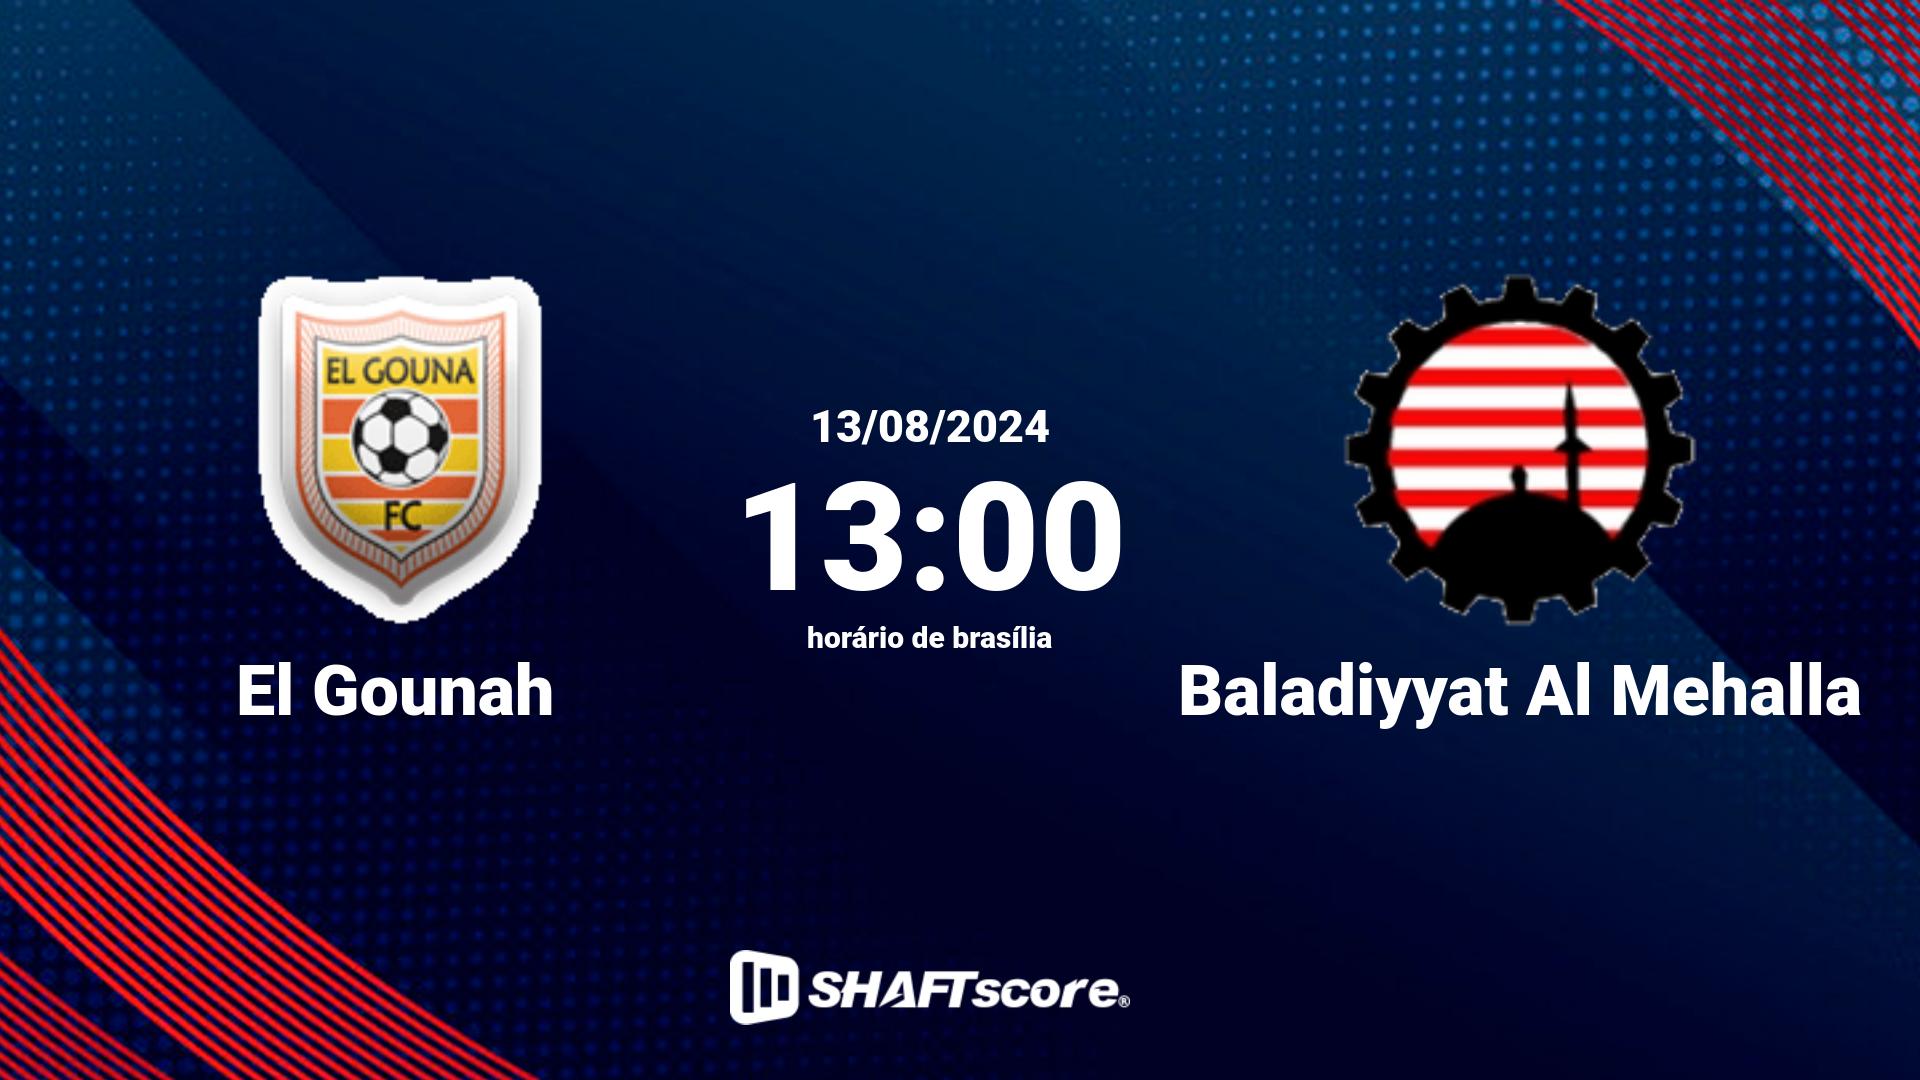 Estatísticas do jogo El Gounah vs Baladiyyat Al Mehalla 13.08 13:00